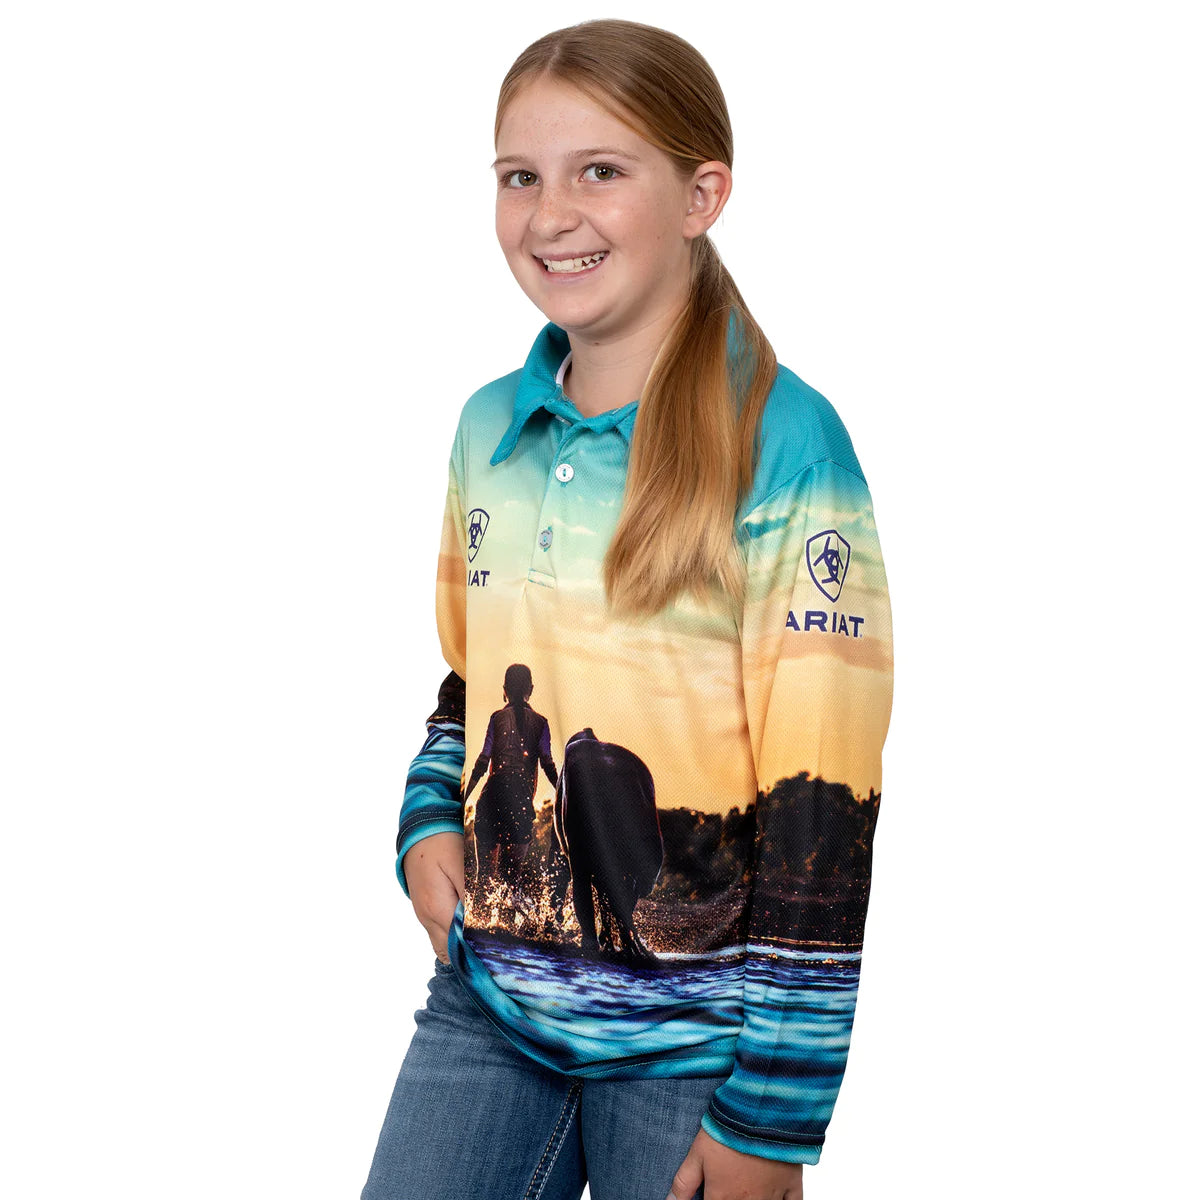 Ariat Girls Fishing Shirt - Western Horses - Bairnsdale Horse Centre